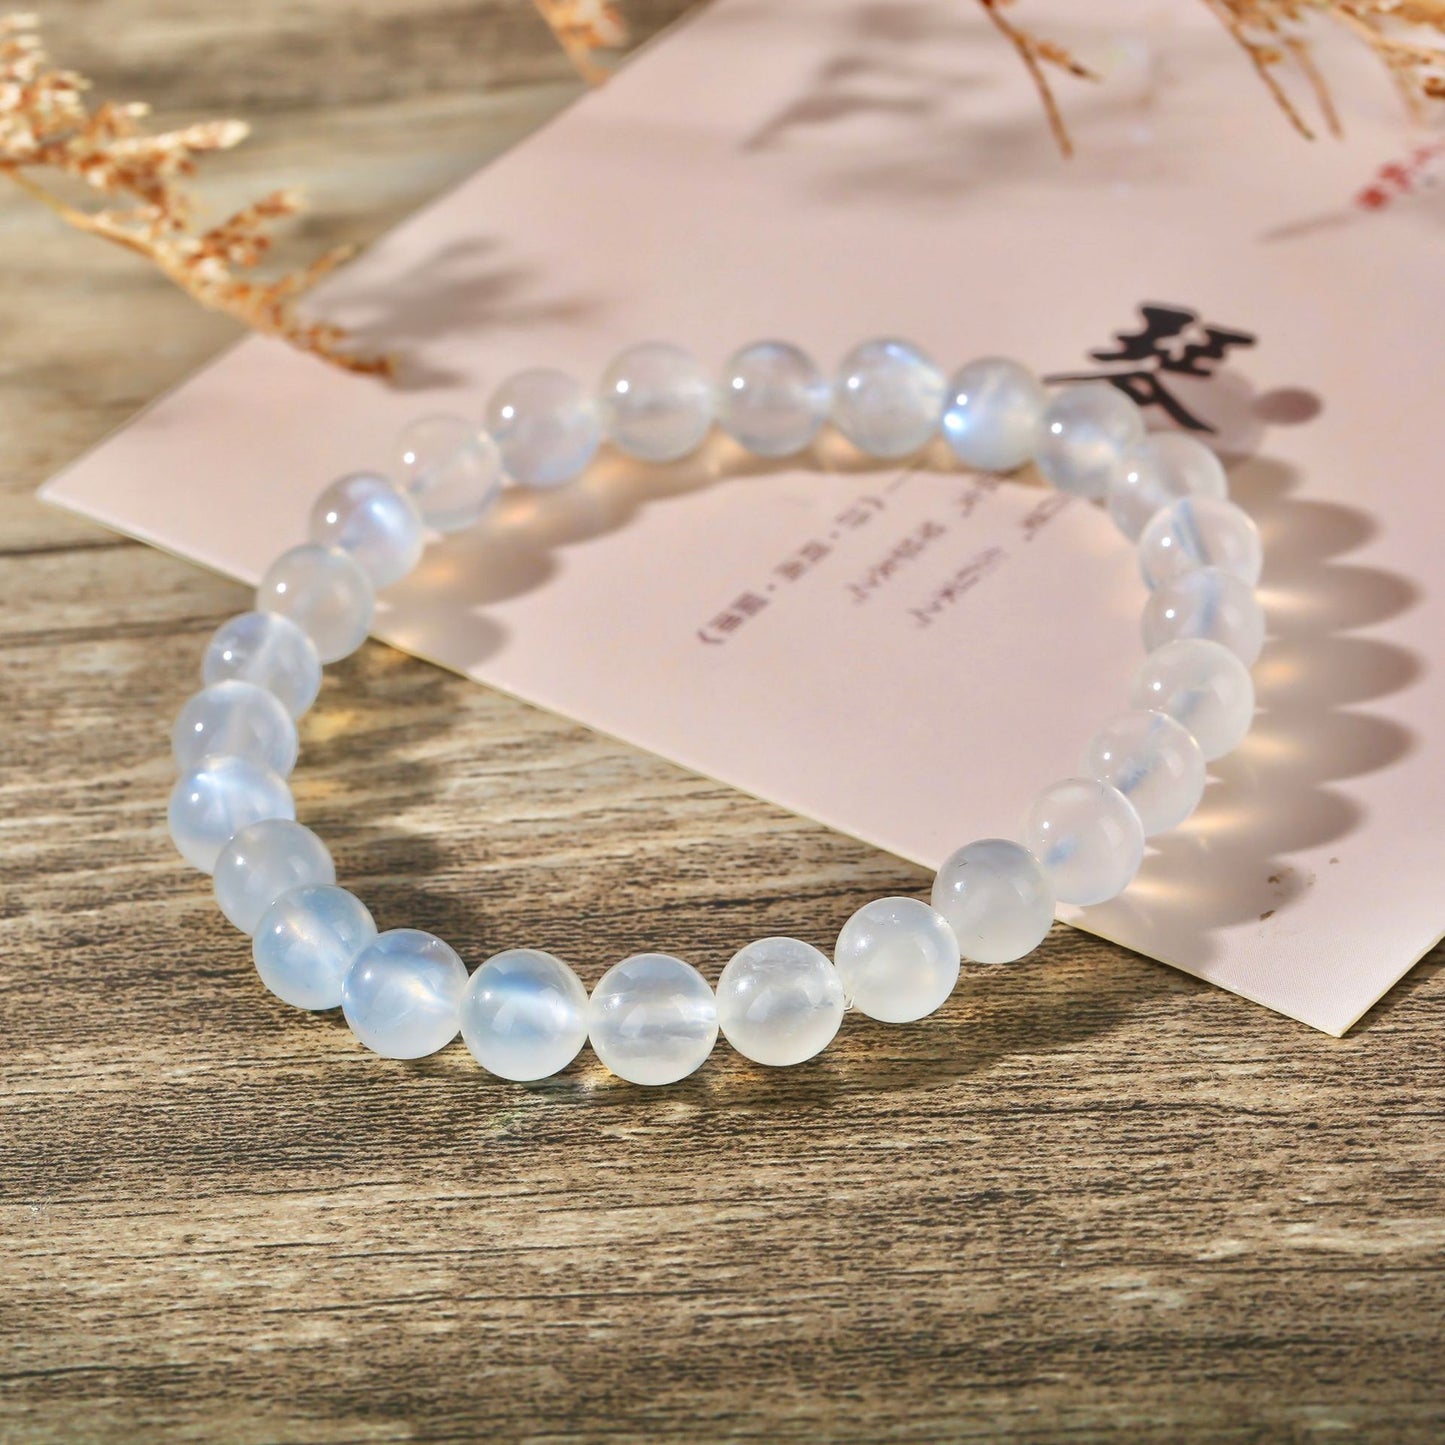 Peaceful Heart - Moonstone Balance Bracelet